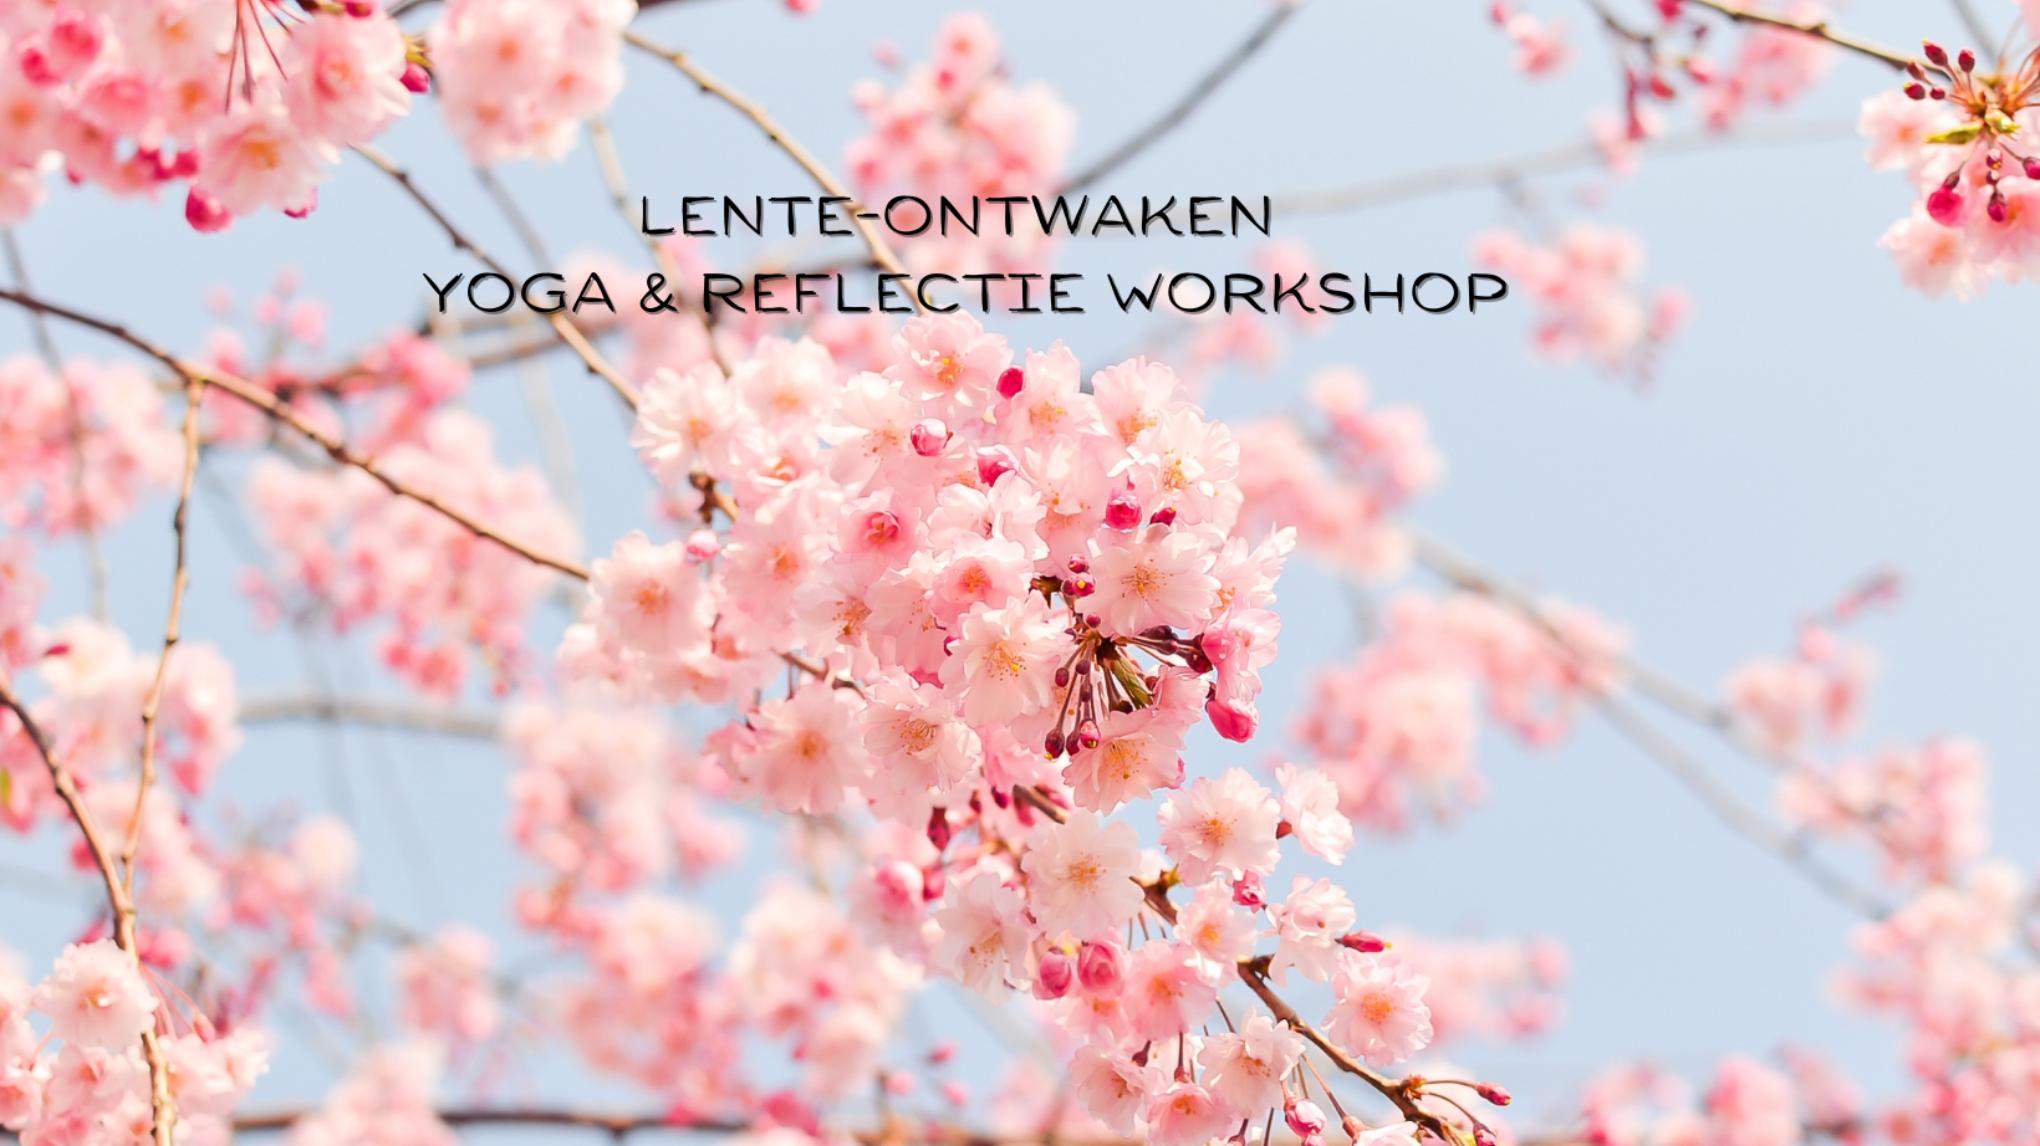 Lente-ontwaken Yoga & Reflectie Workshop